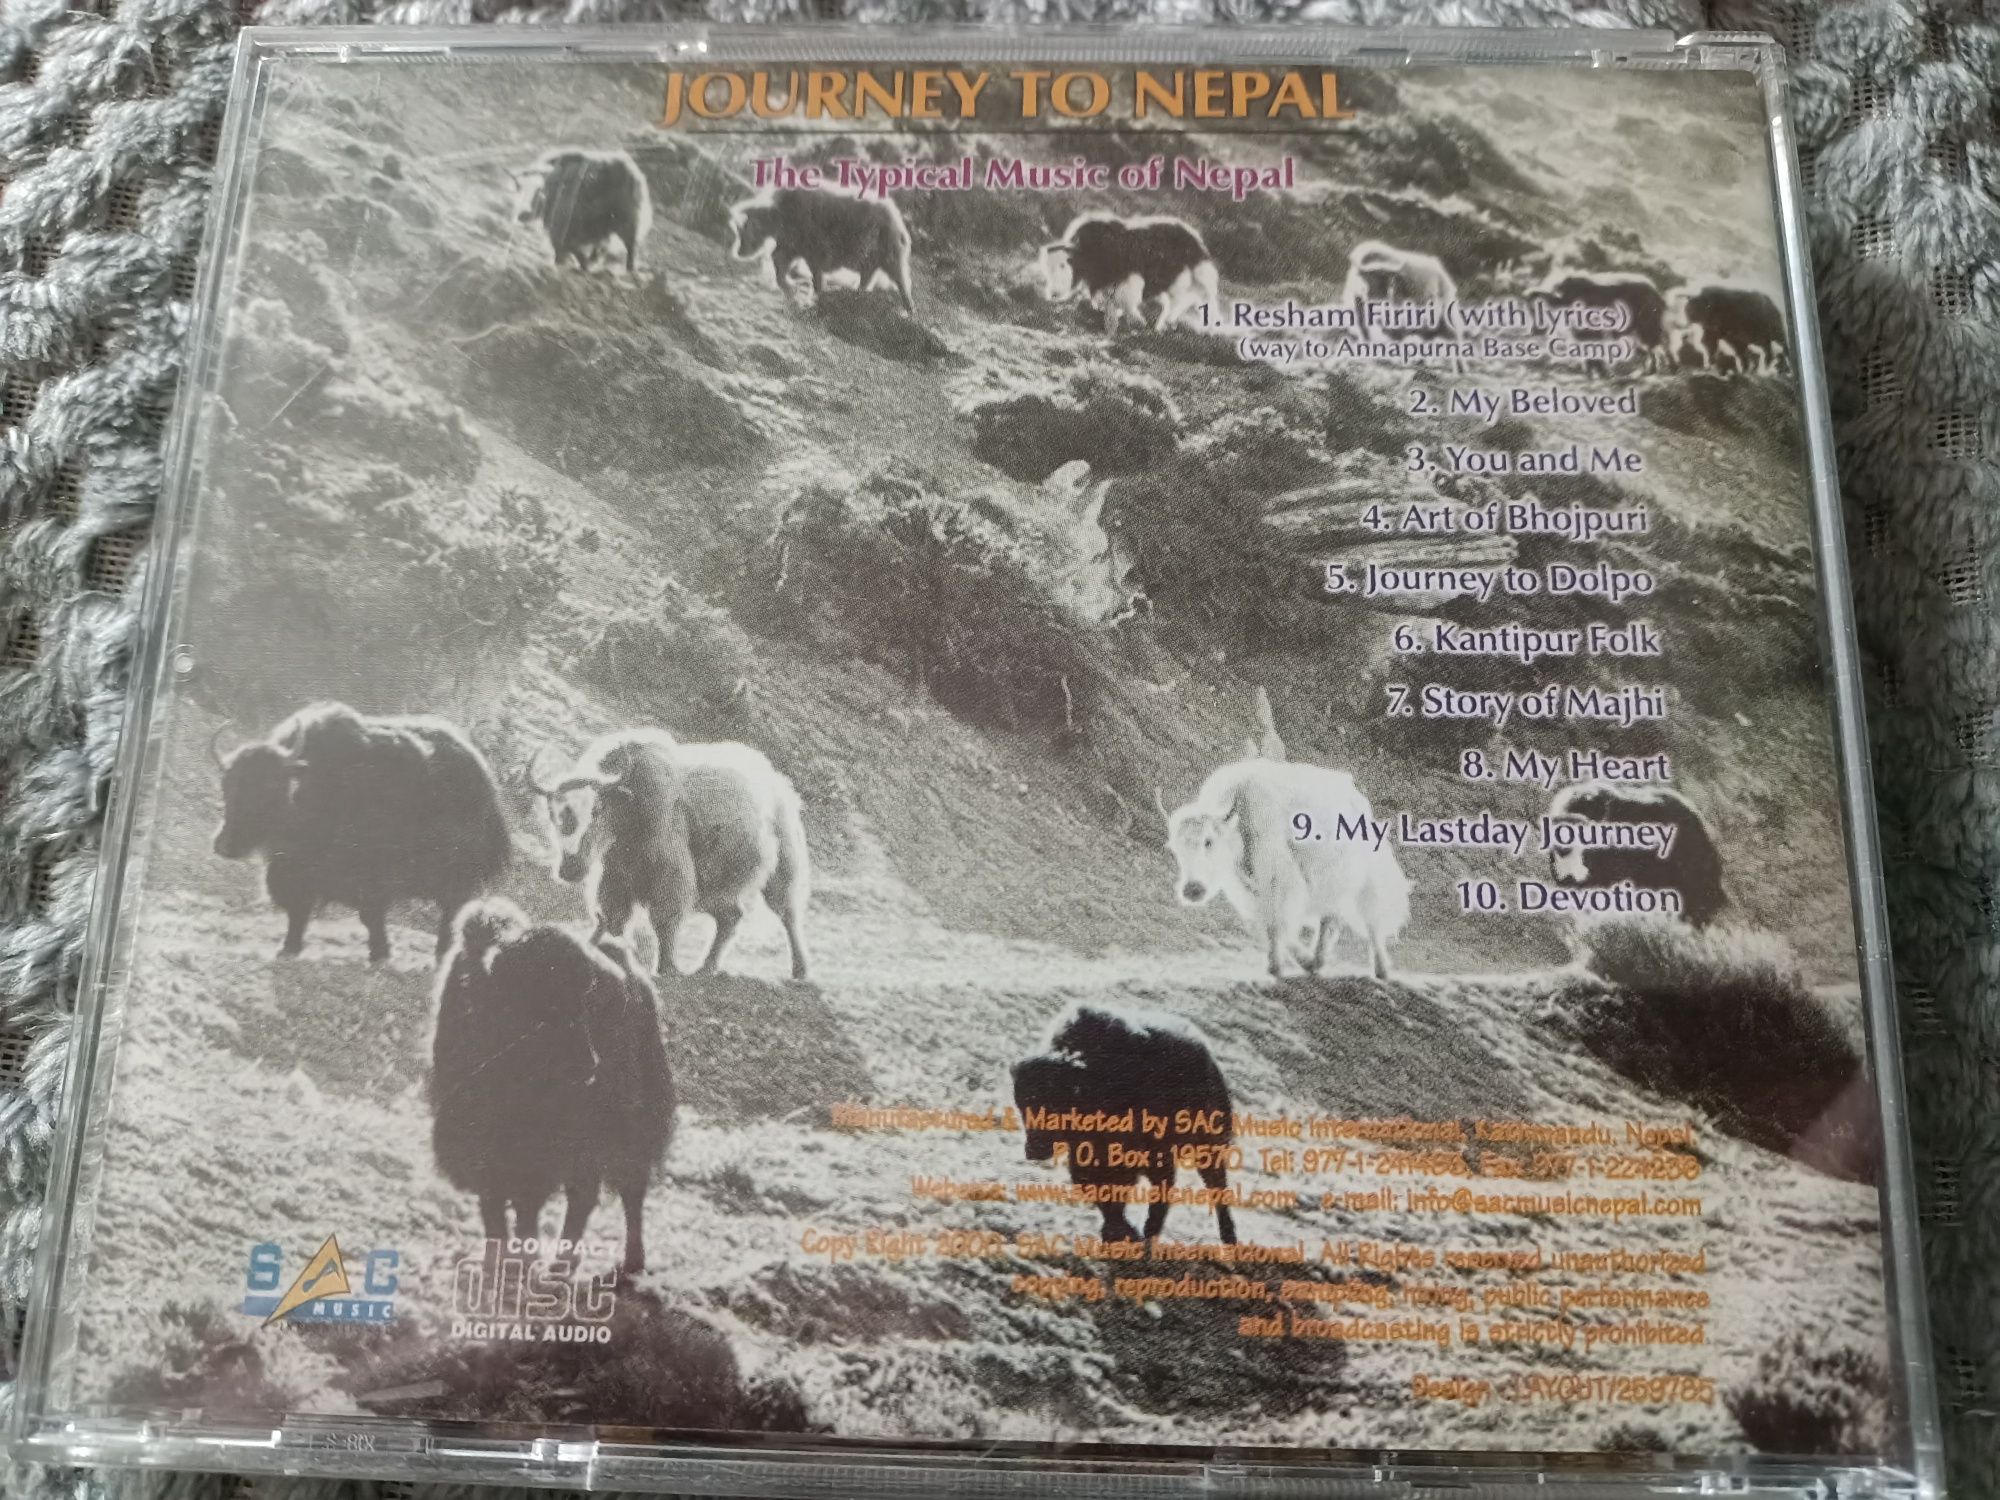 Shyam Sharan Nepali - Journey to Nepal - The Typical Music of Nepal (C